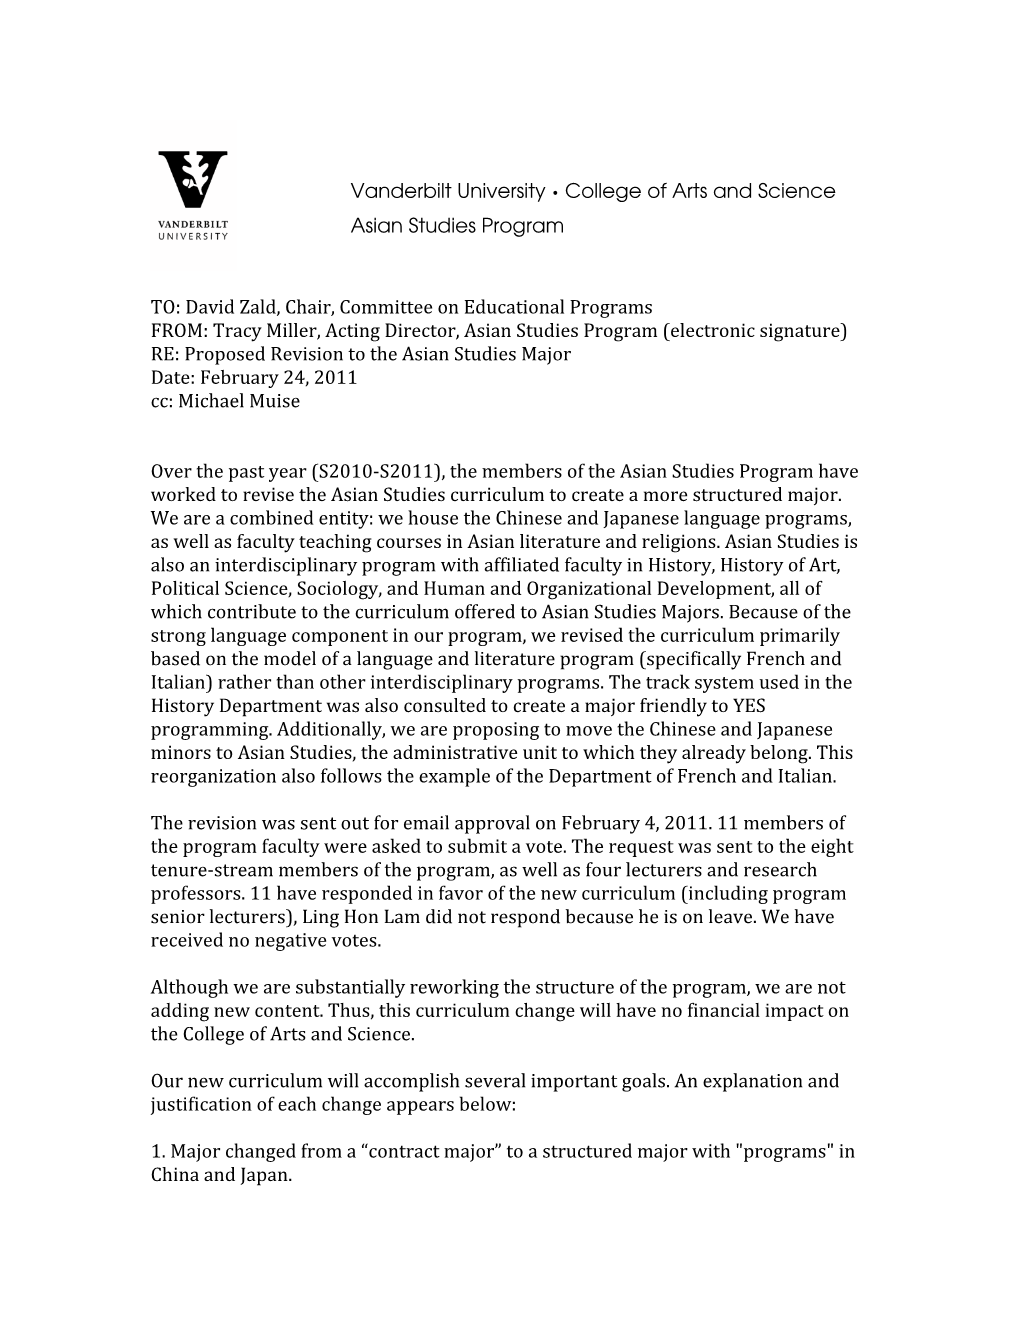 Vanderbilt University • College of Arts and Science Asian Studies Program